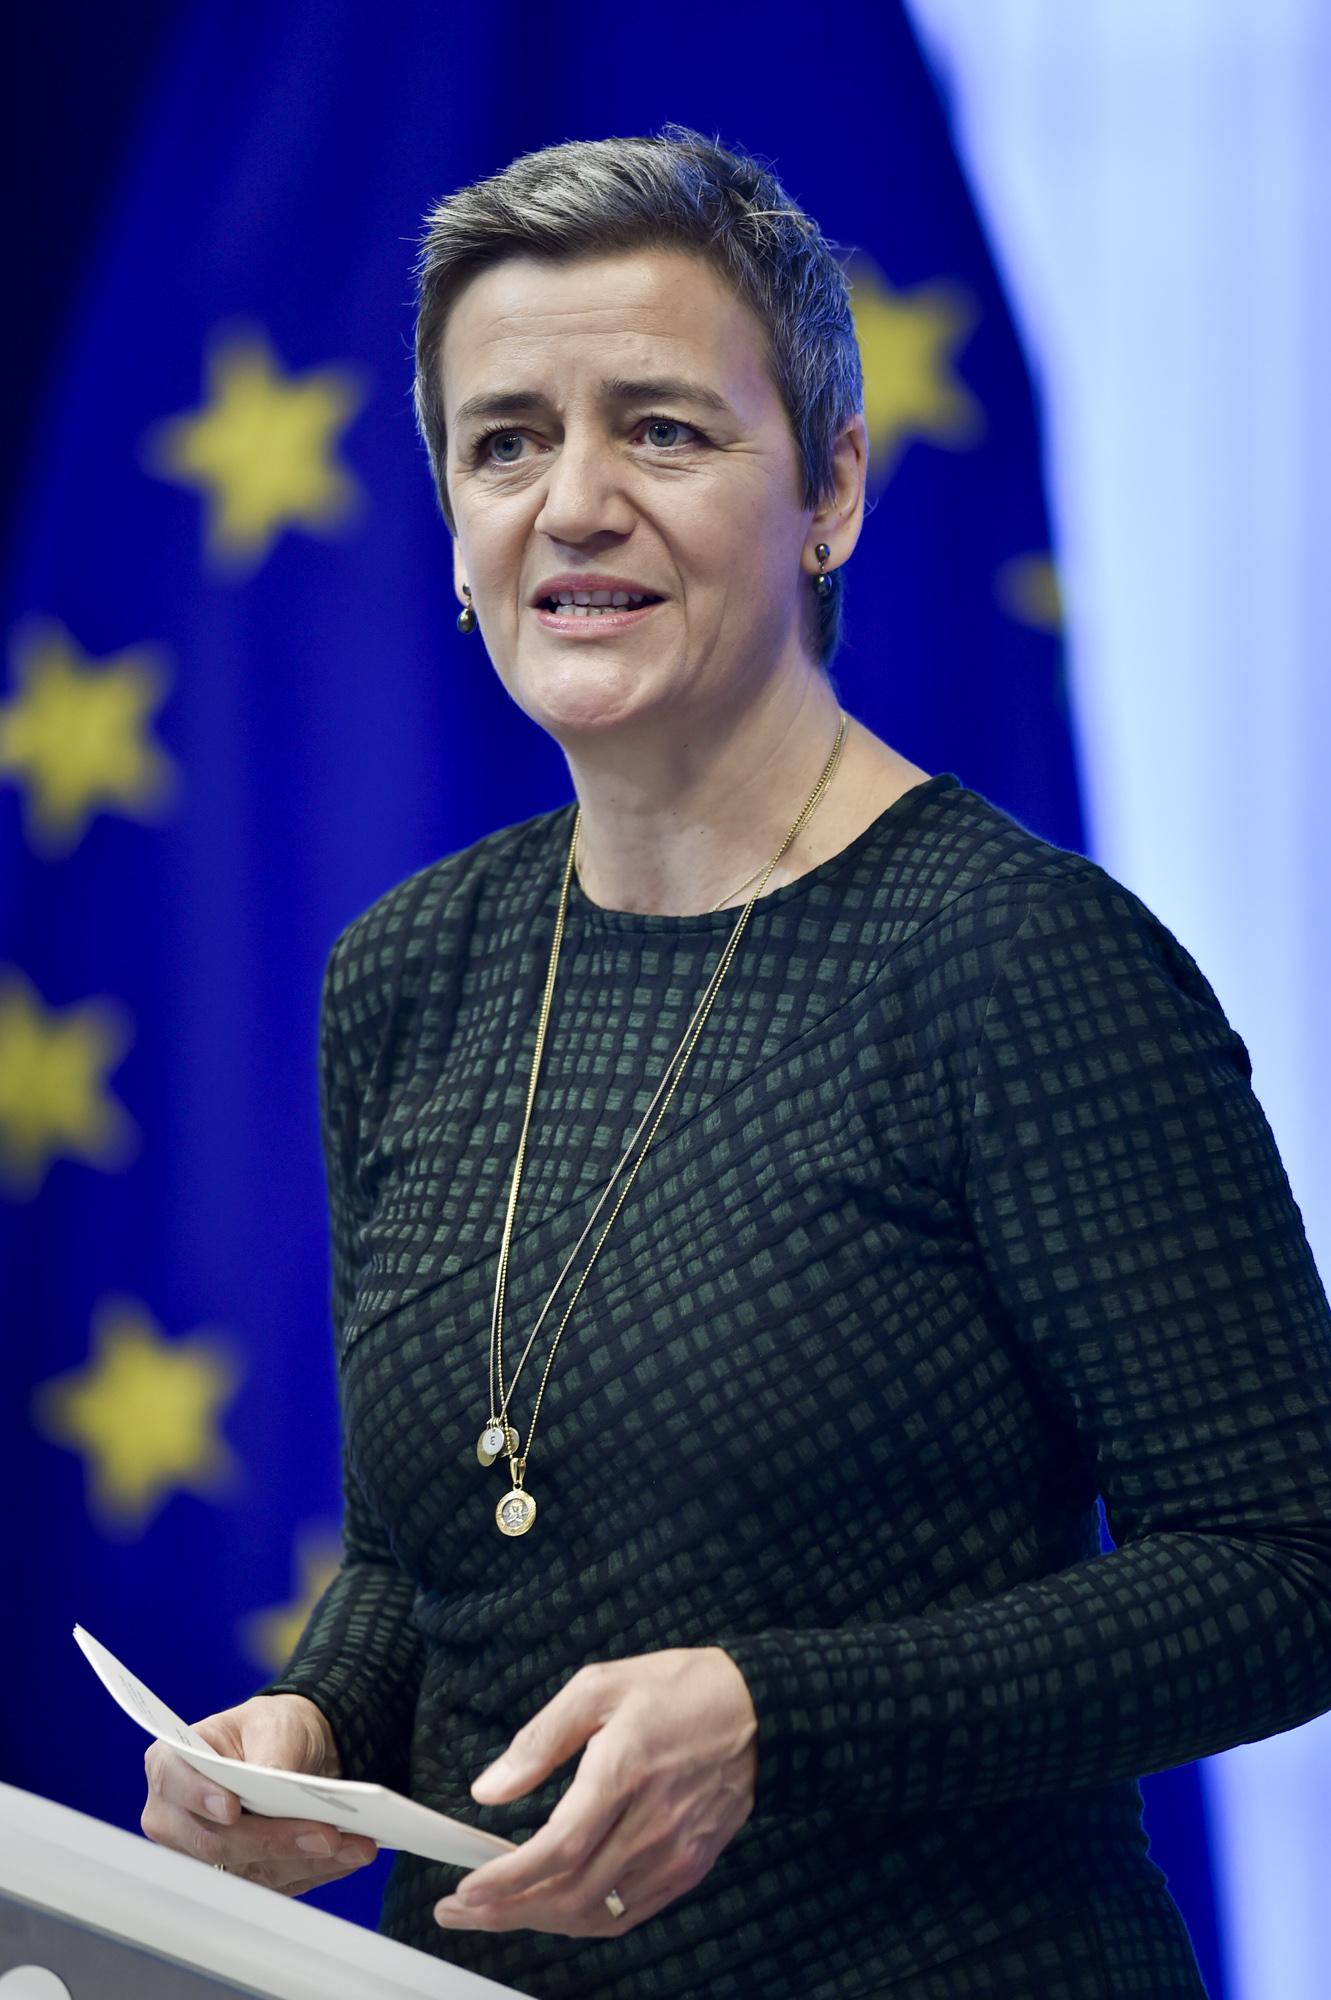 Magrethe Vestager, Commissioner for Competition, European Commission